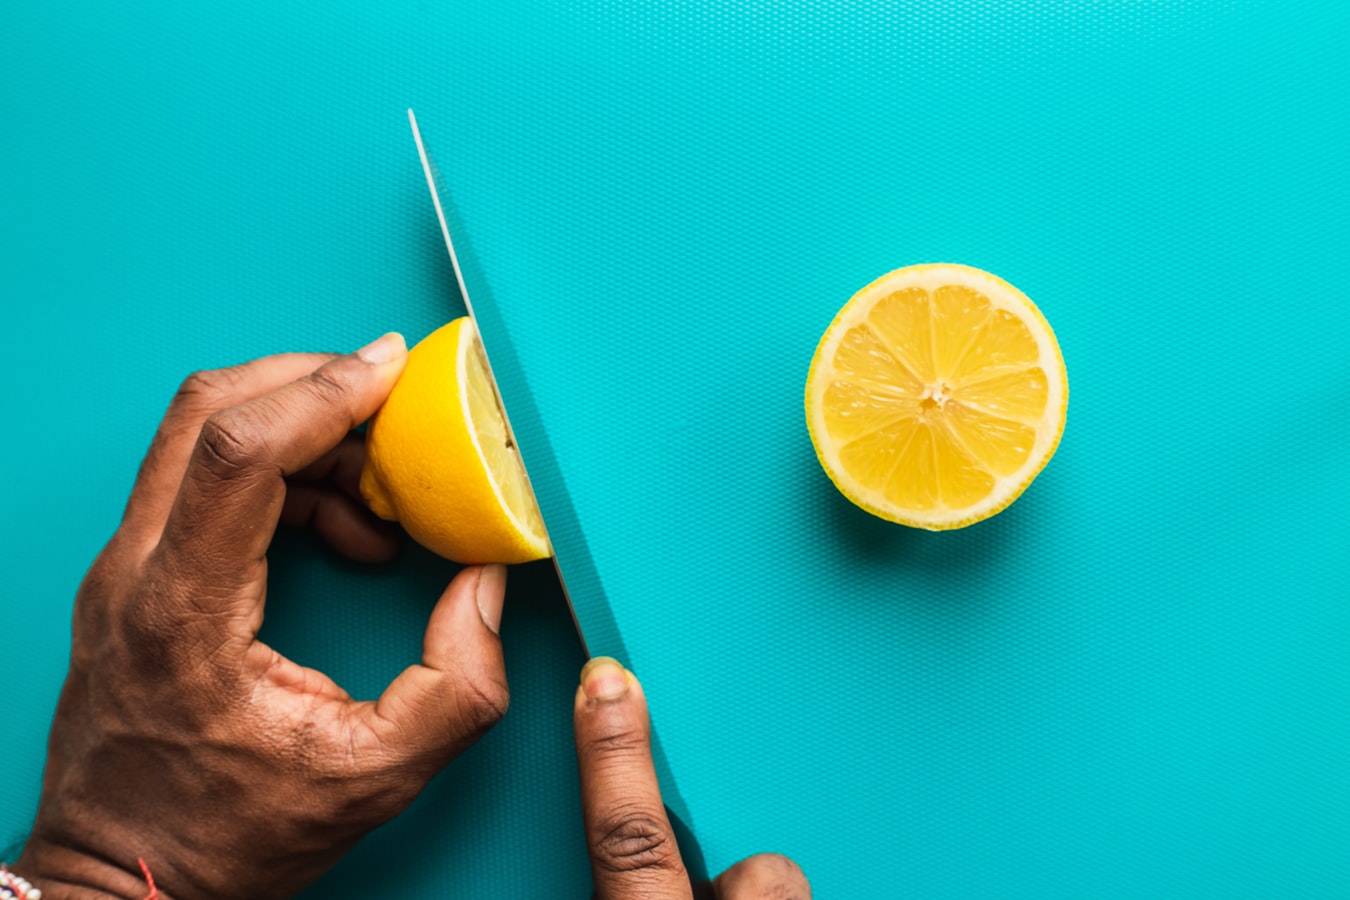 Cutting up lemons